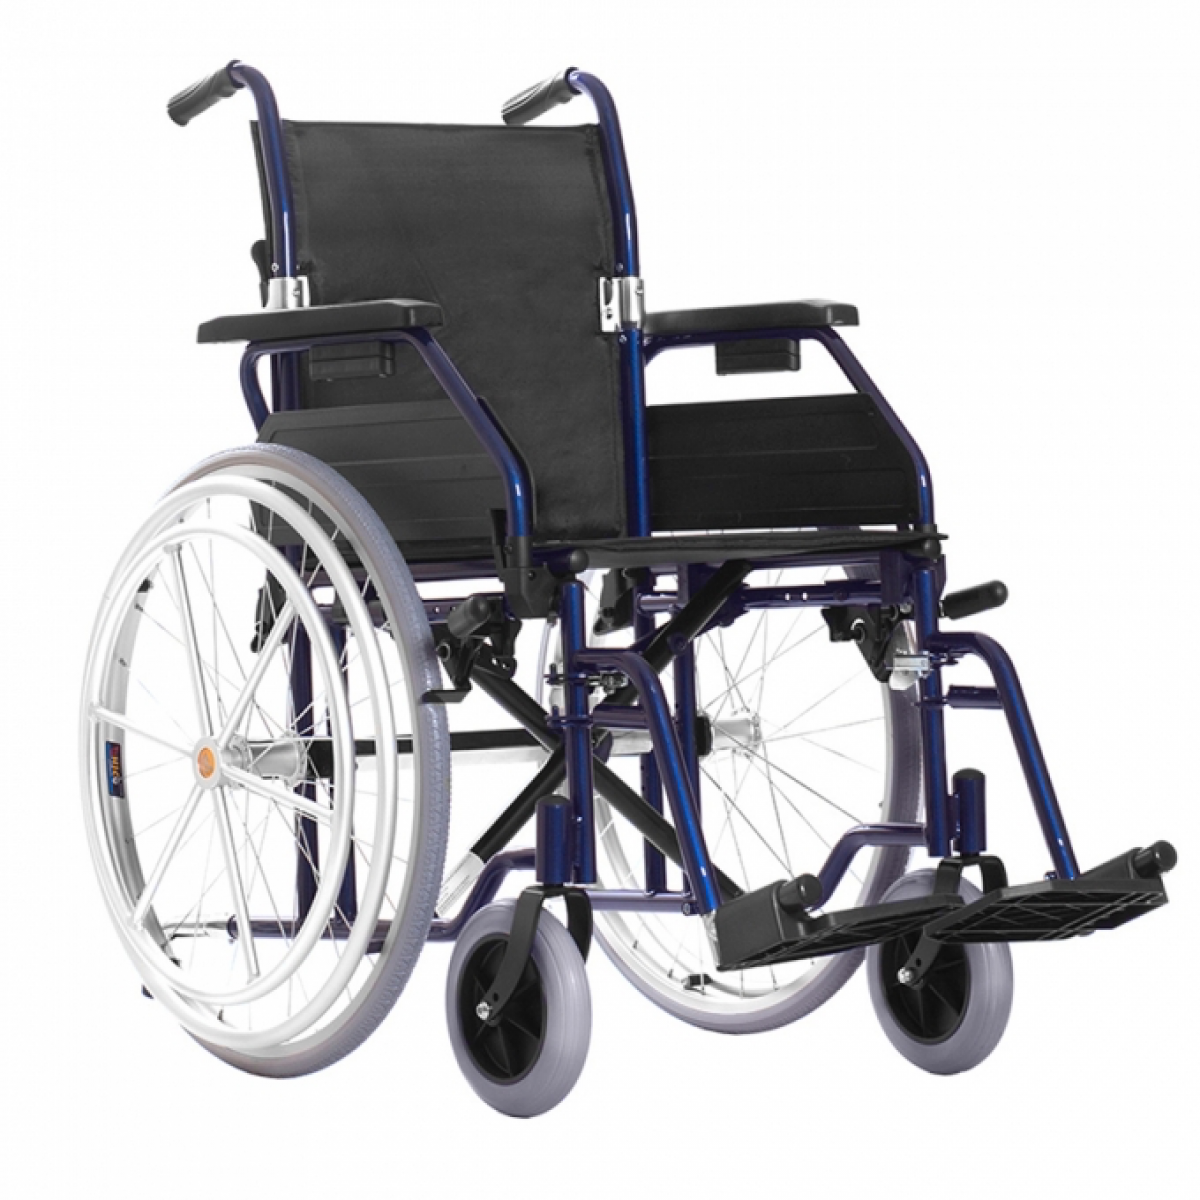 Ortonica Base 180-18uu. Инвалидное кресло-коляска Ортоника. Инвалидное кресло Ортоника. Кресло коляска для инвалидов Ортоника.